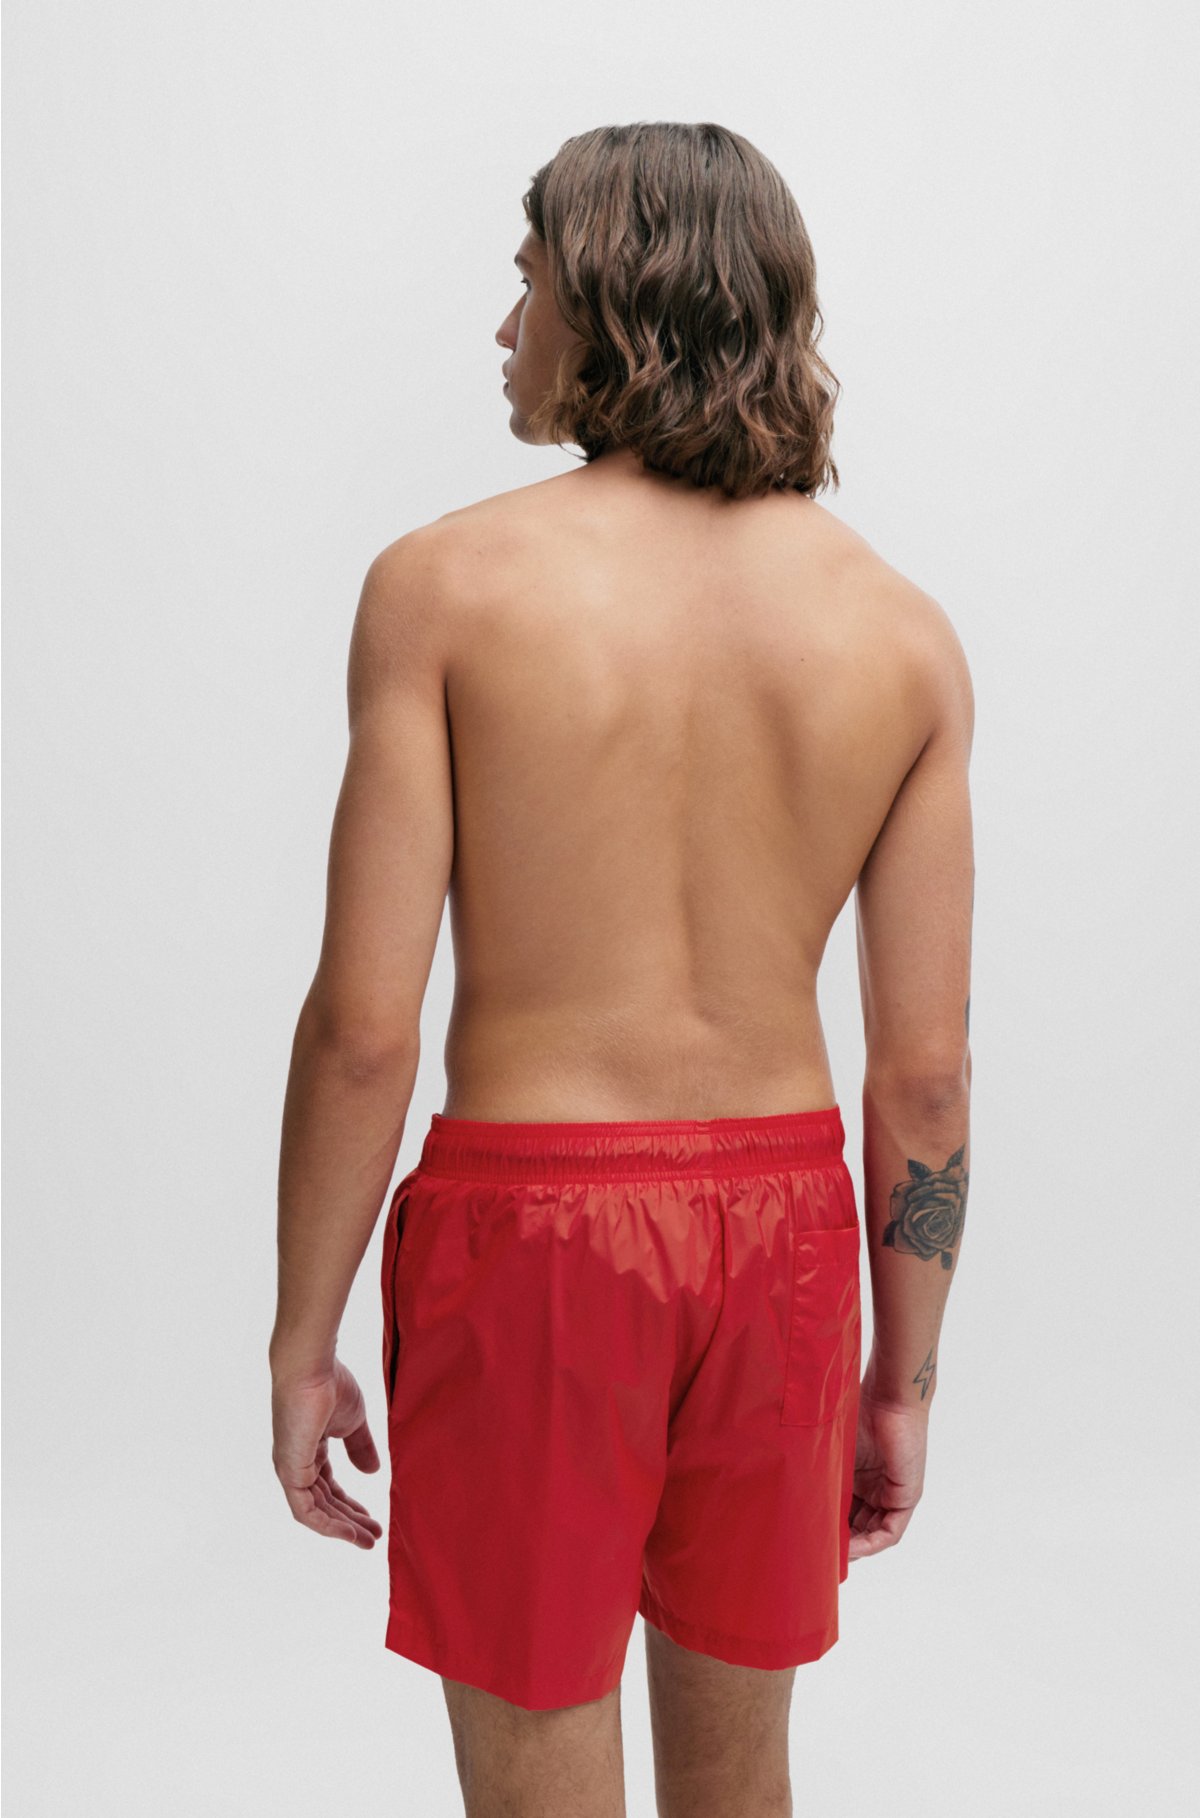 Acne Studios Men's Printed Shorts